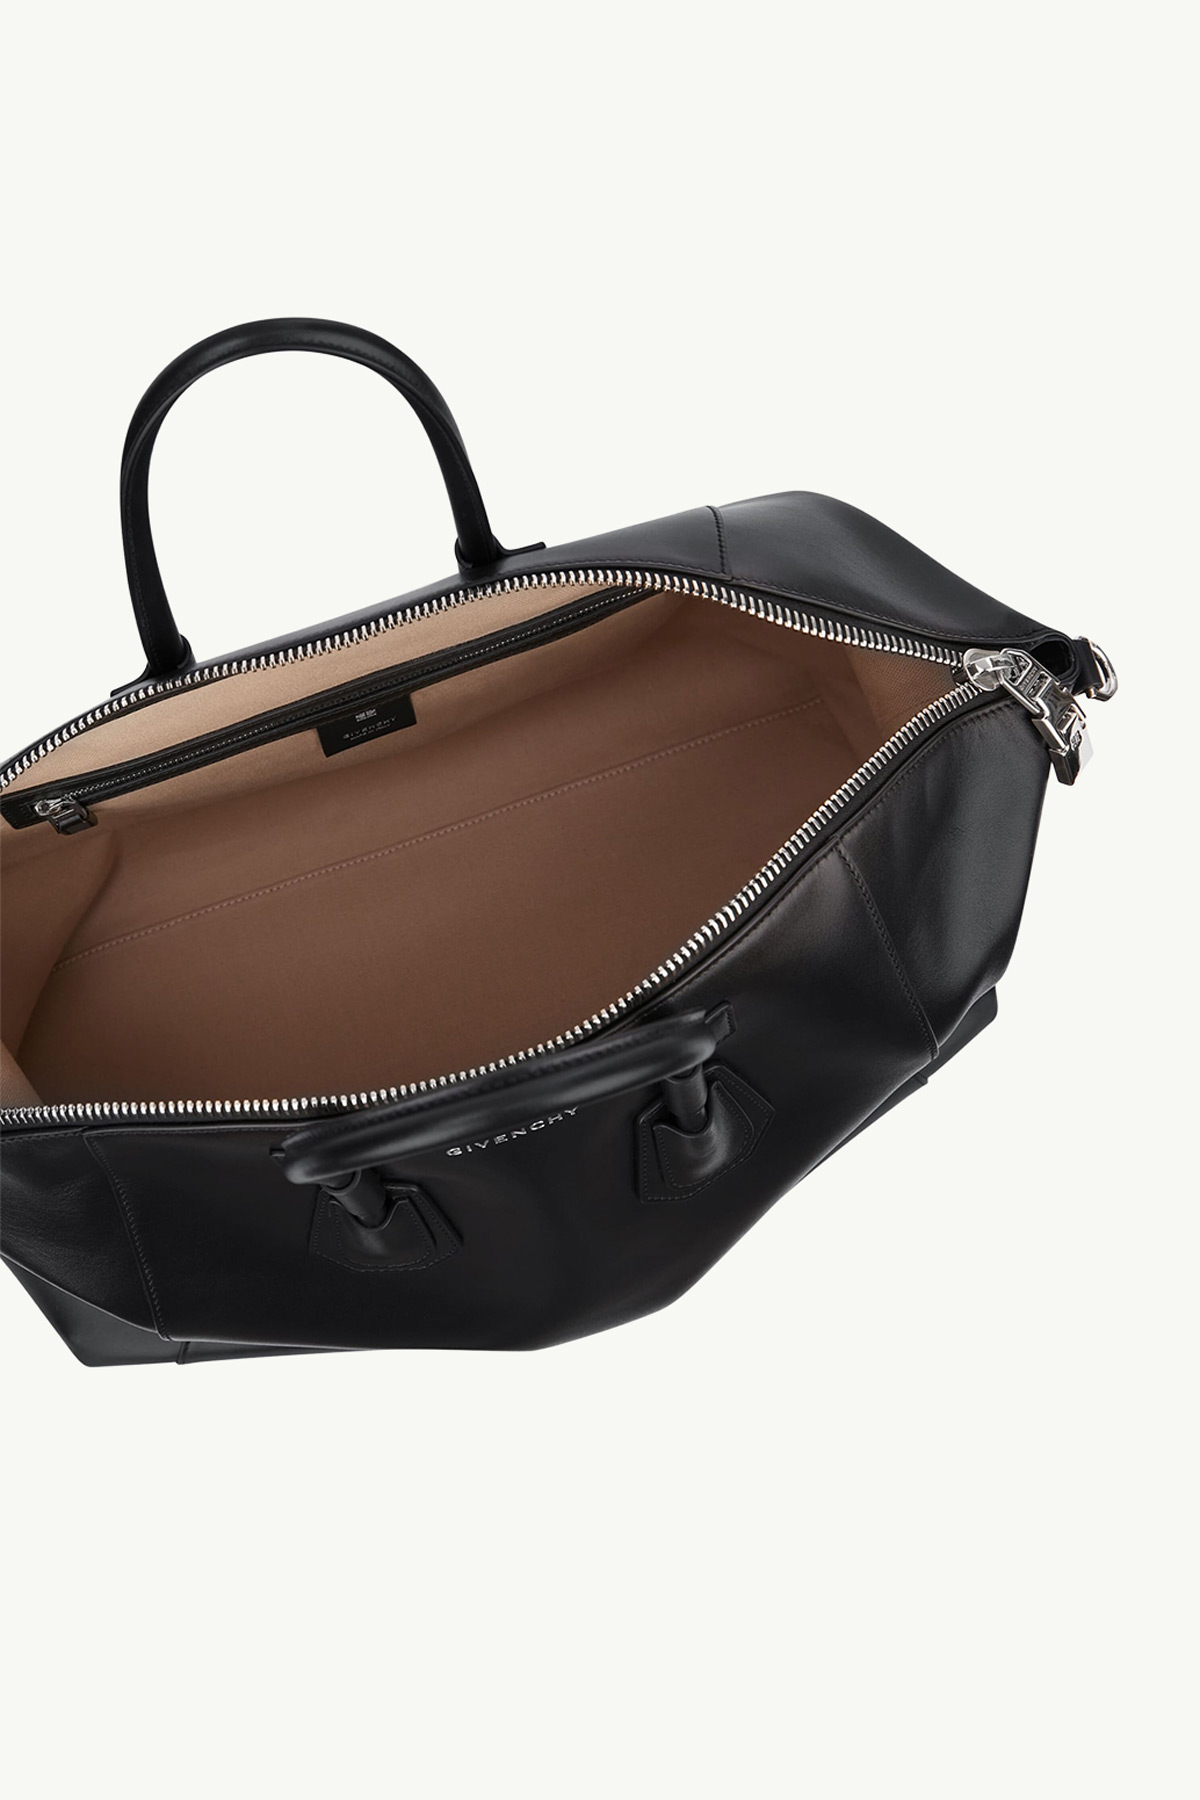 GIVENCHY Small Antigona Sport Bag in Black Smooth Leather 3